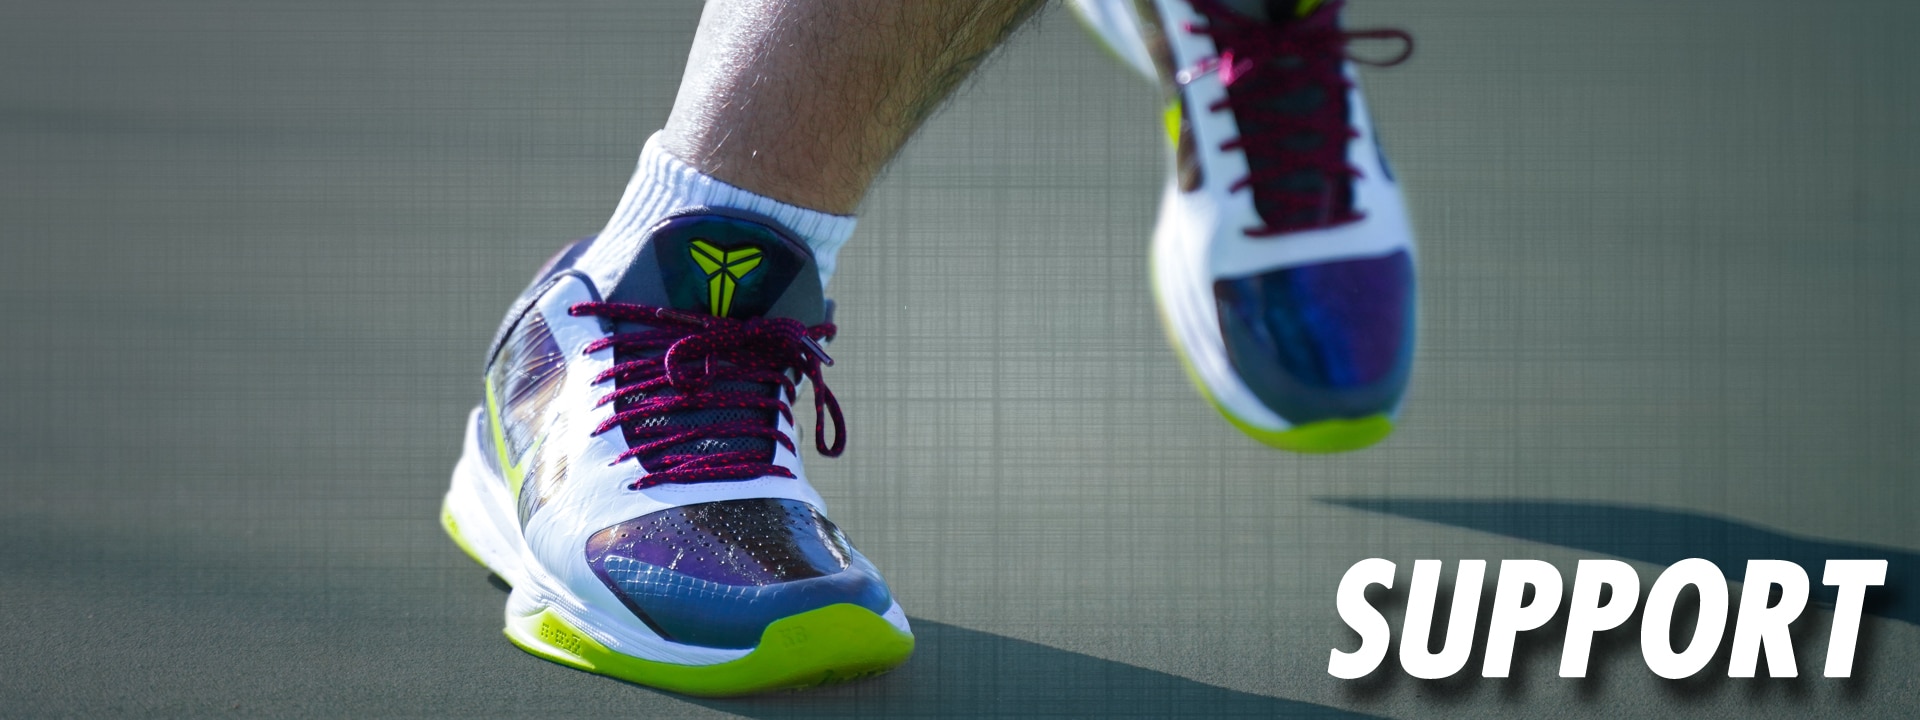 Nike Kobe 5 Protro: Support